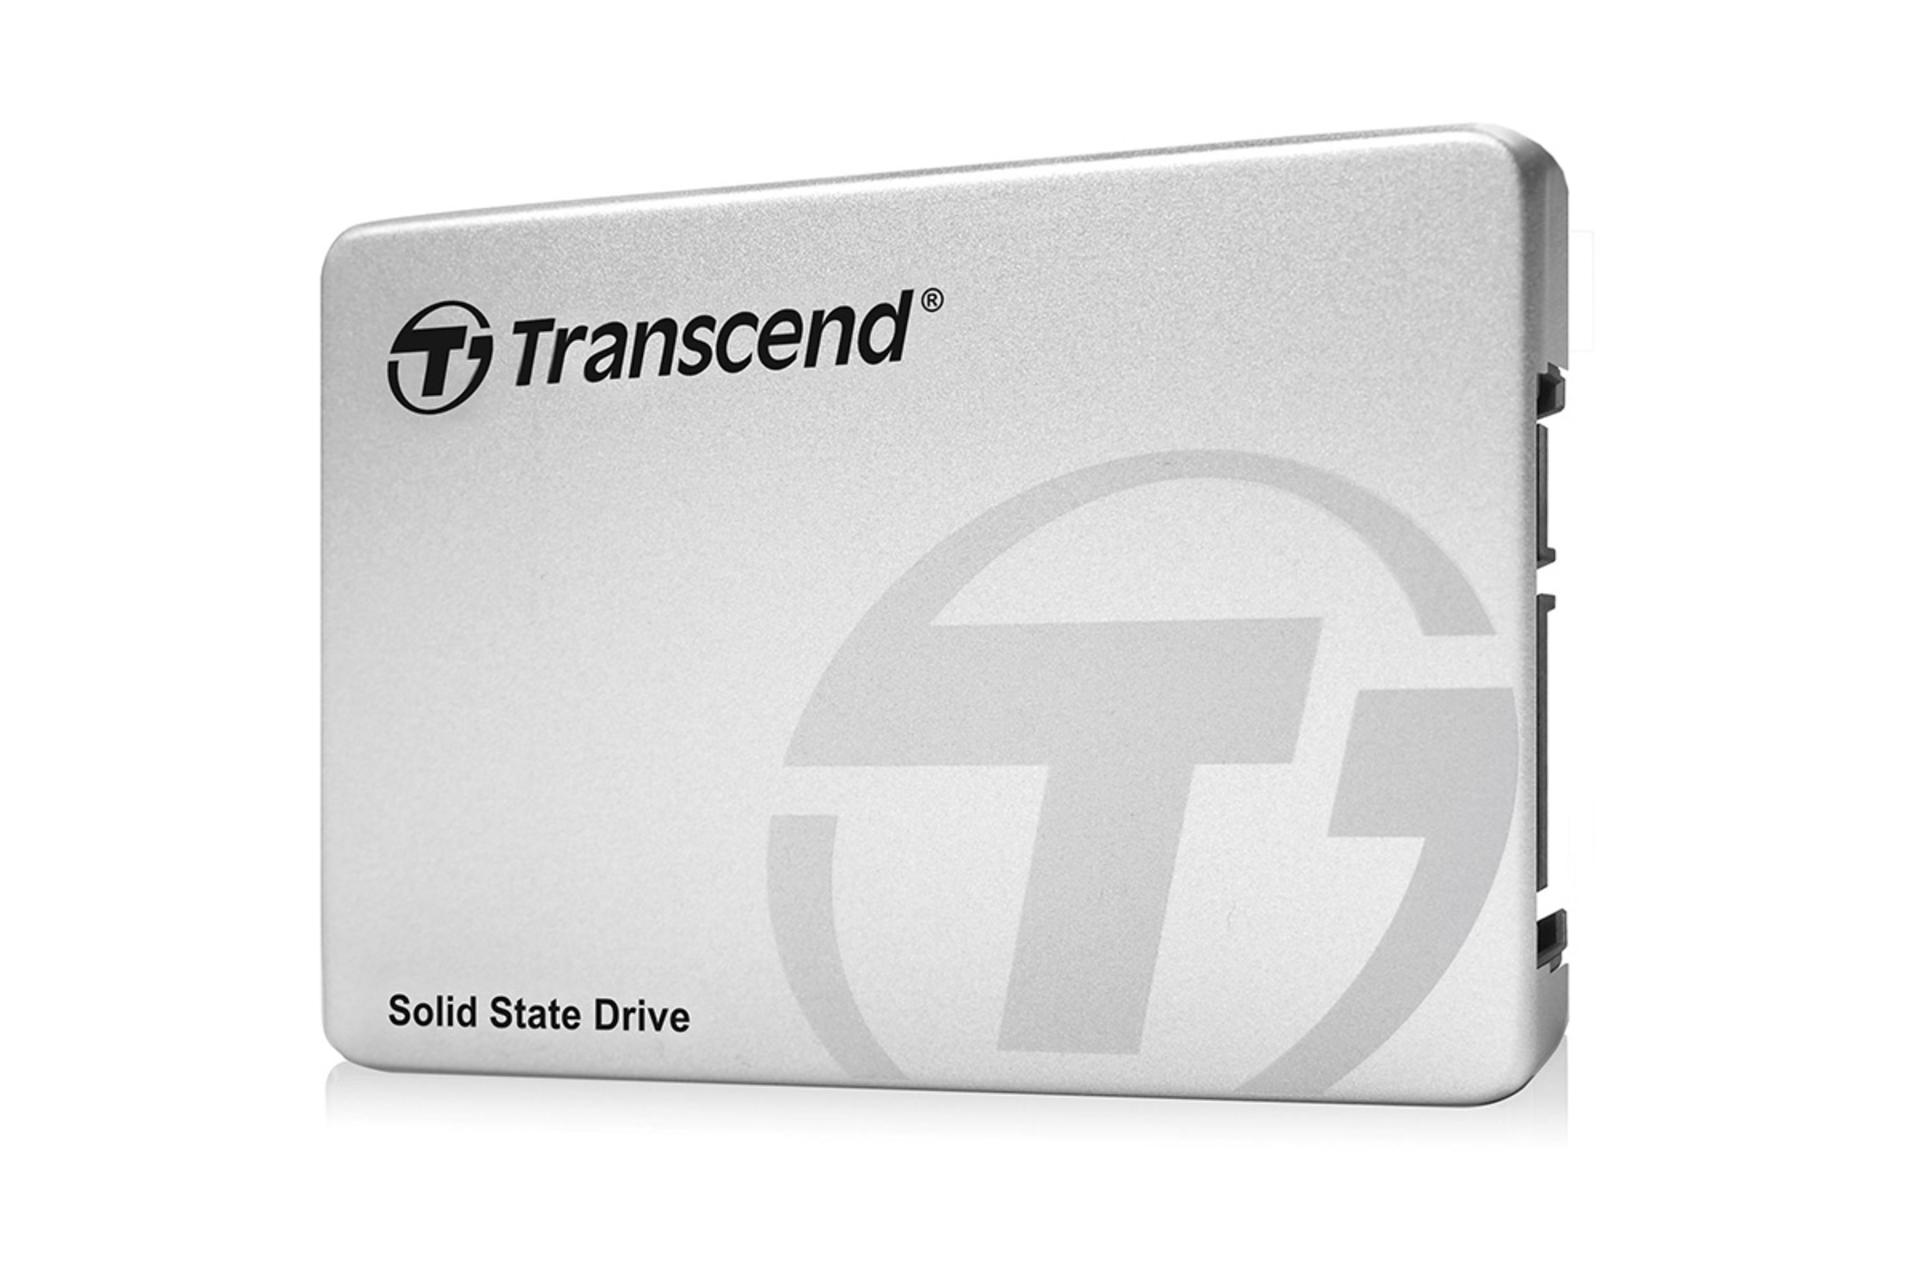 Transcend SSD370S 128GB